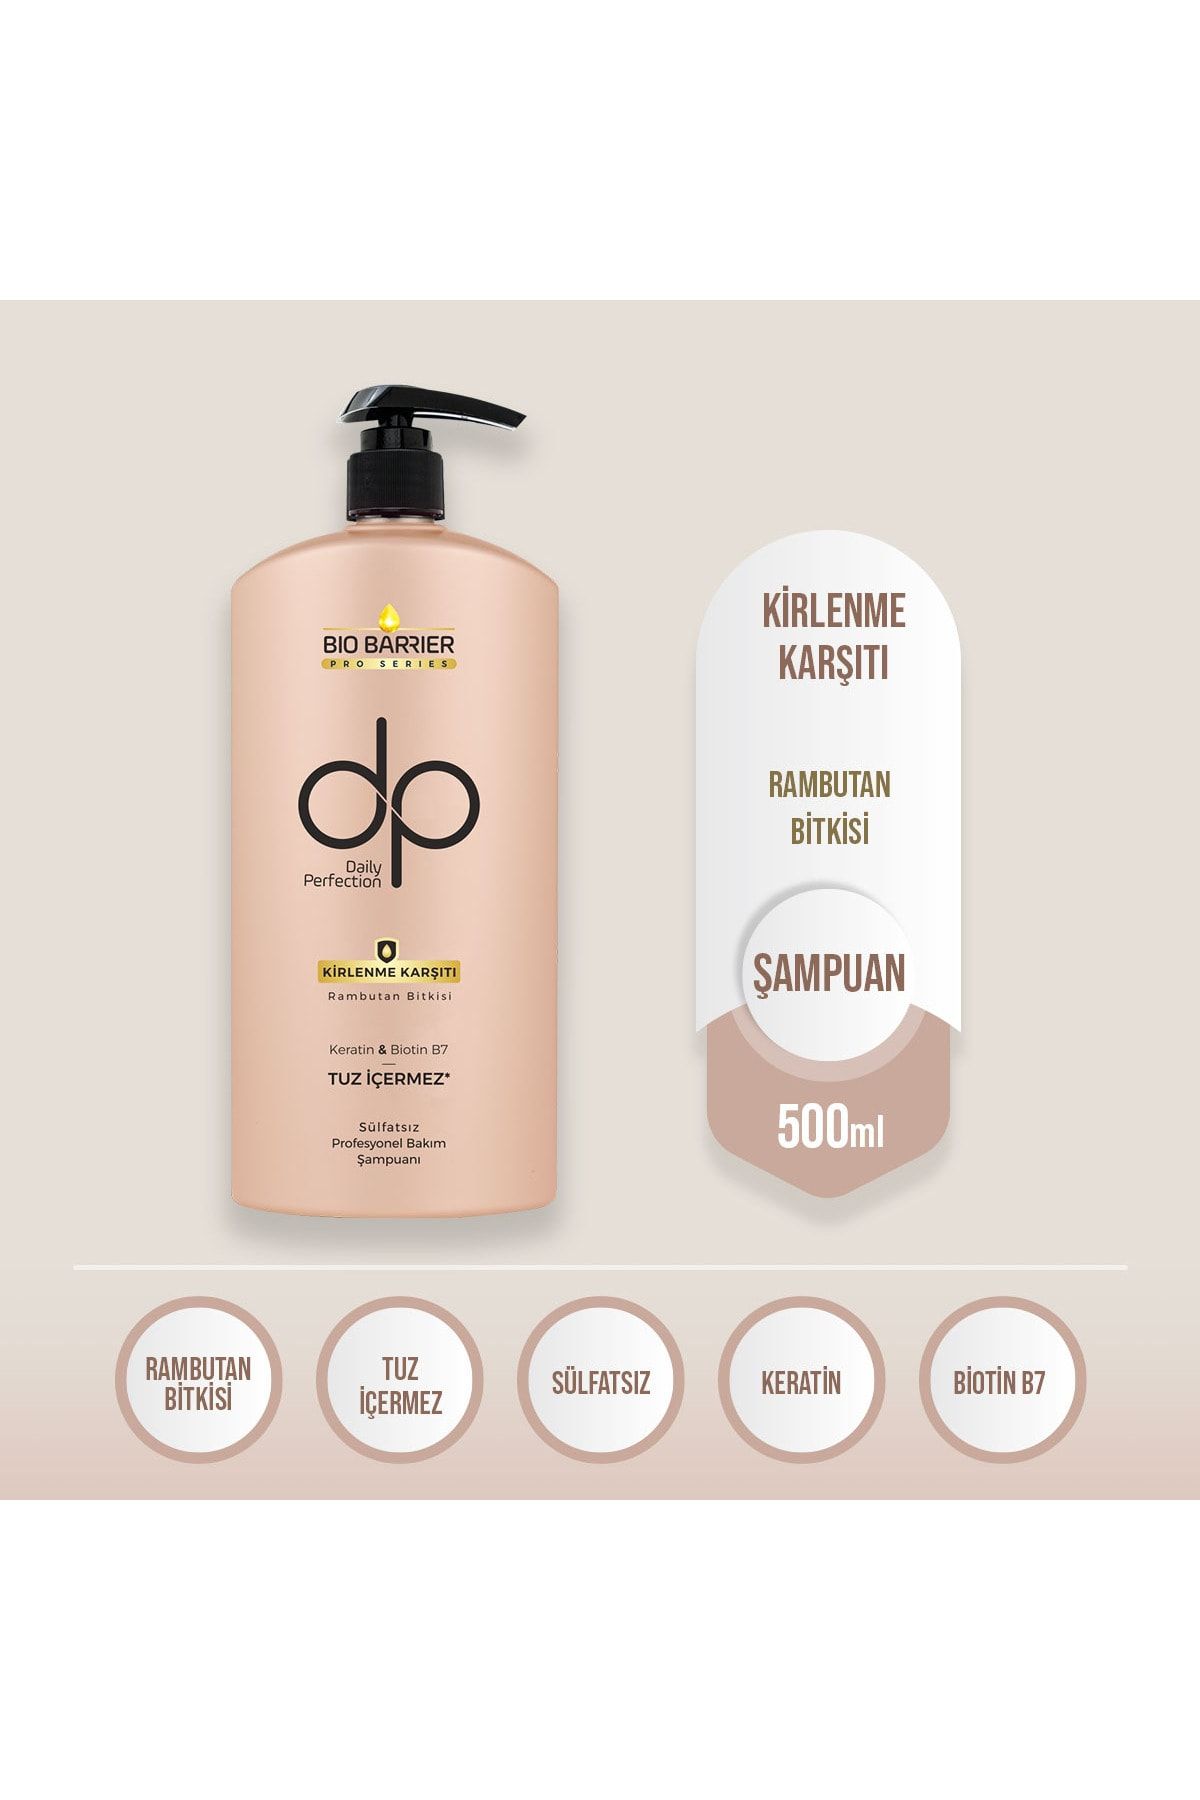 dp Daily Perfection Bio Barrier Kirlenme Karşıtı Şampuan 500 ml